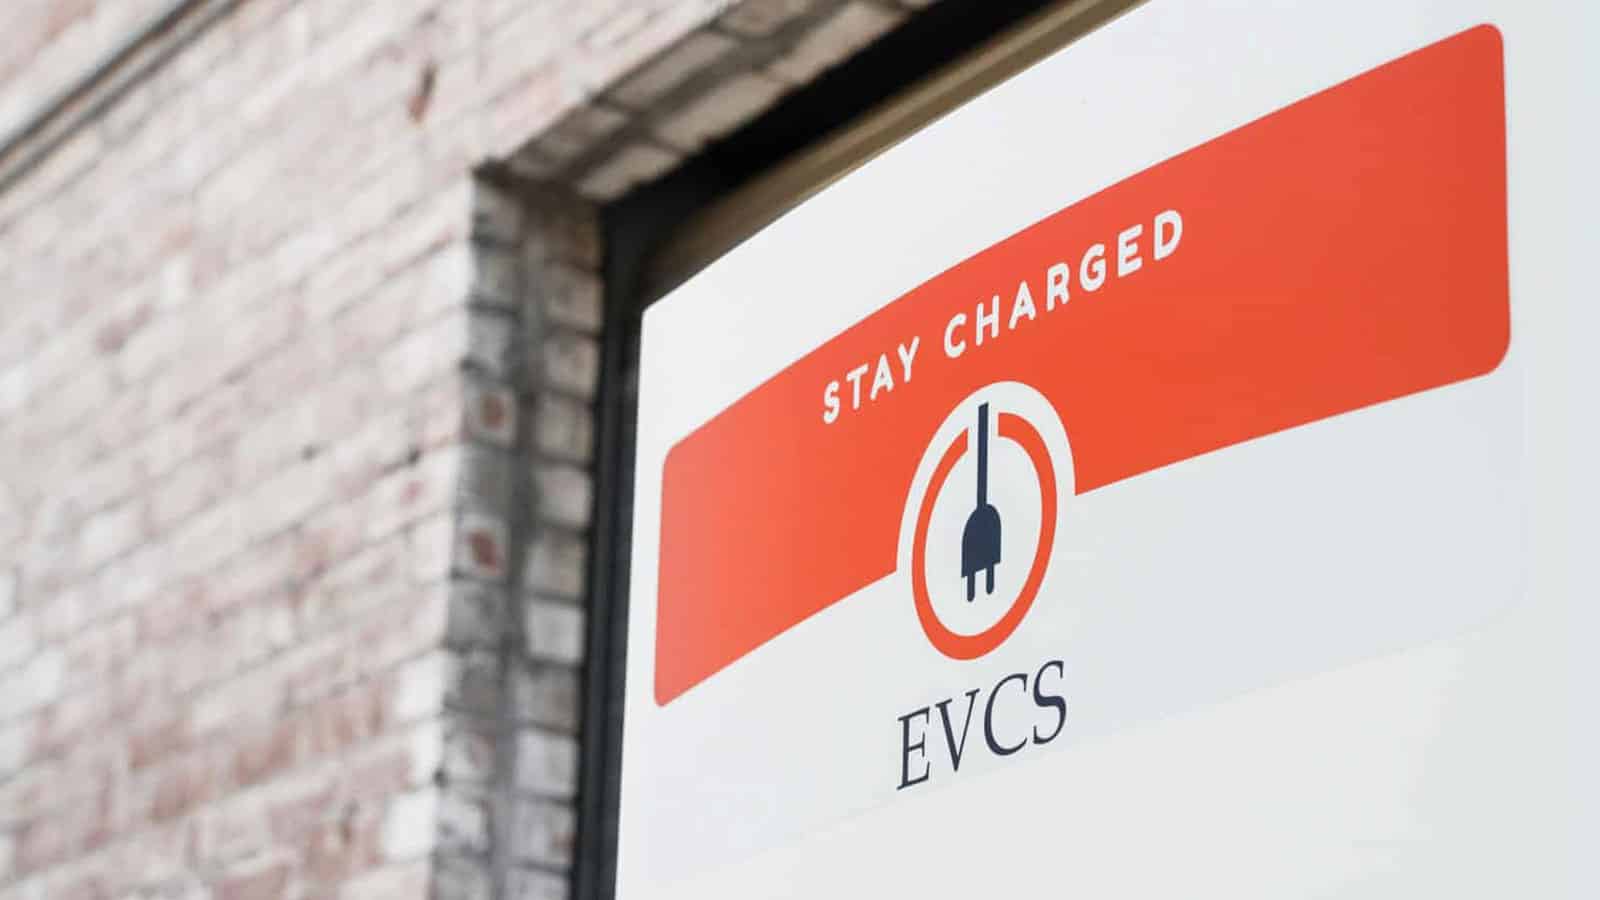 EVCS charging station through CFI Grant Program